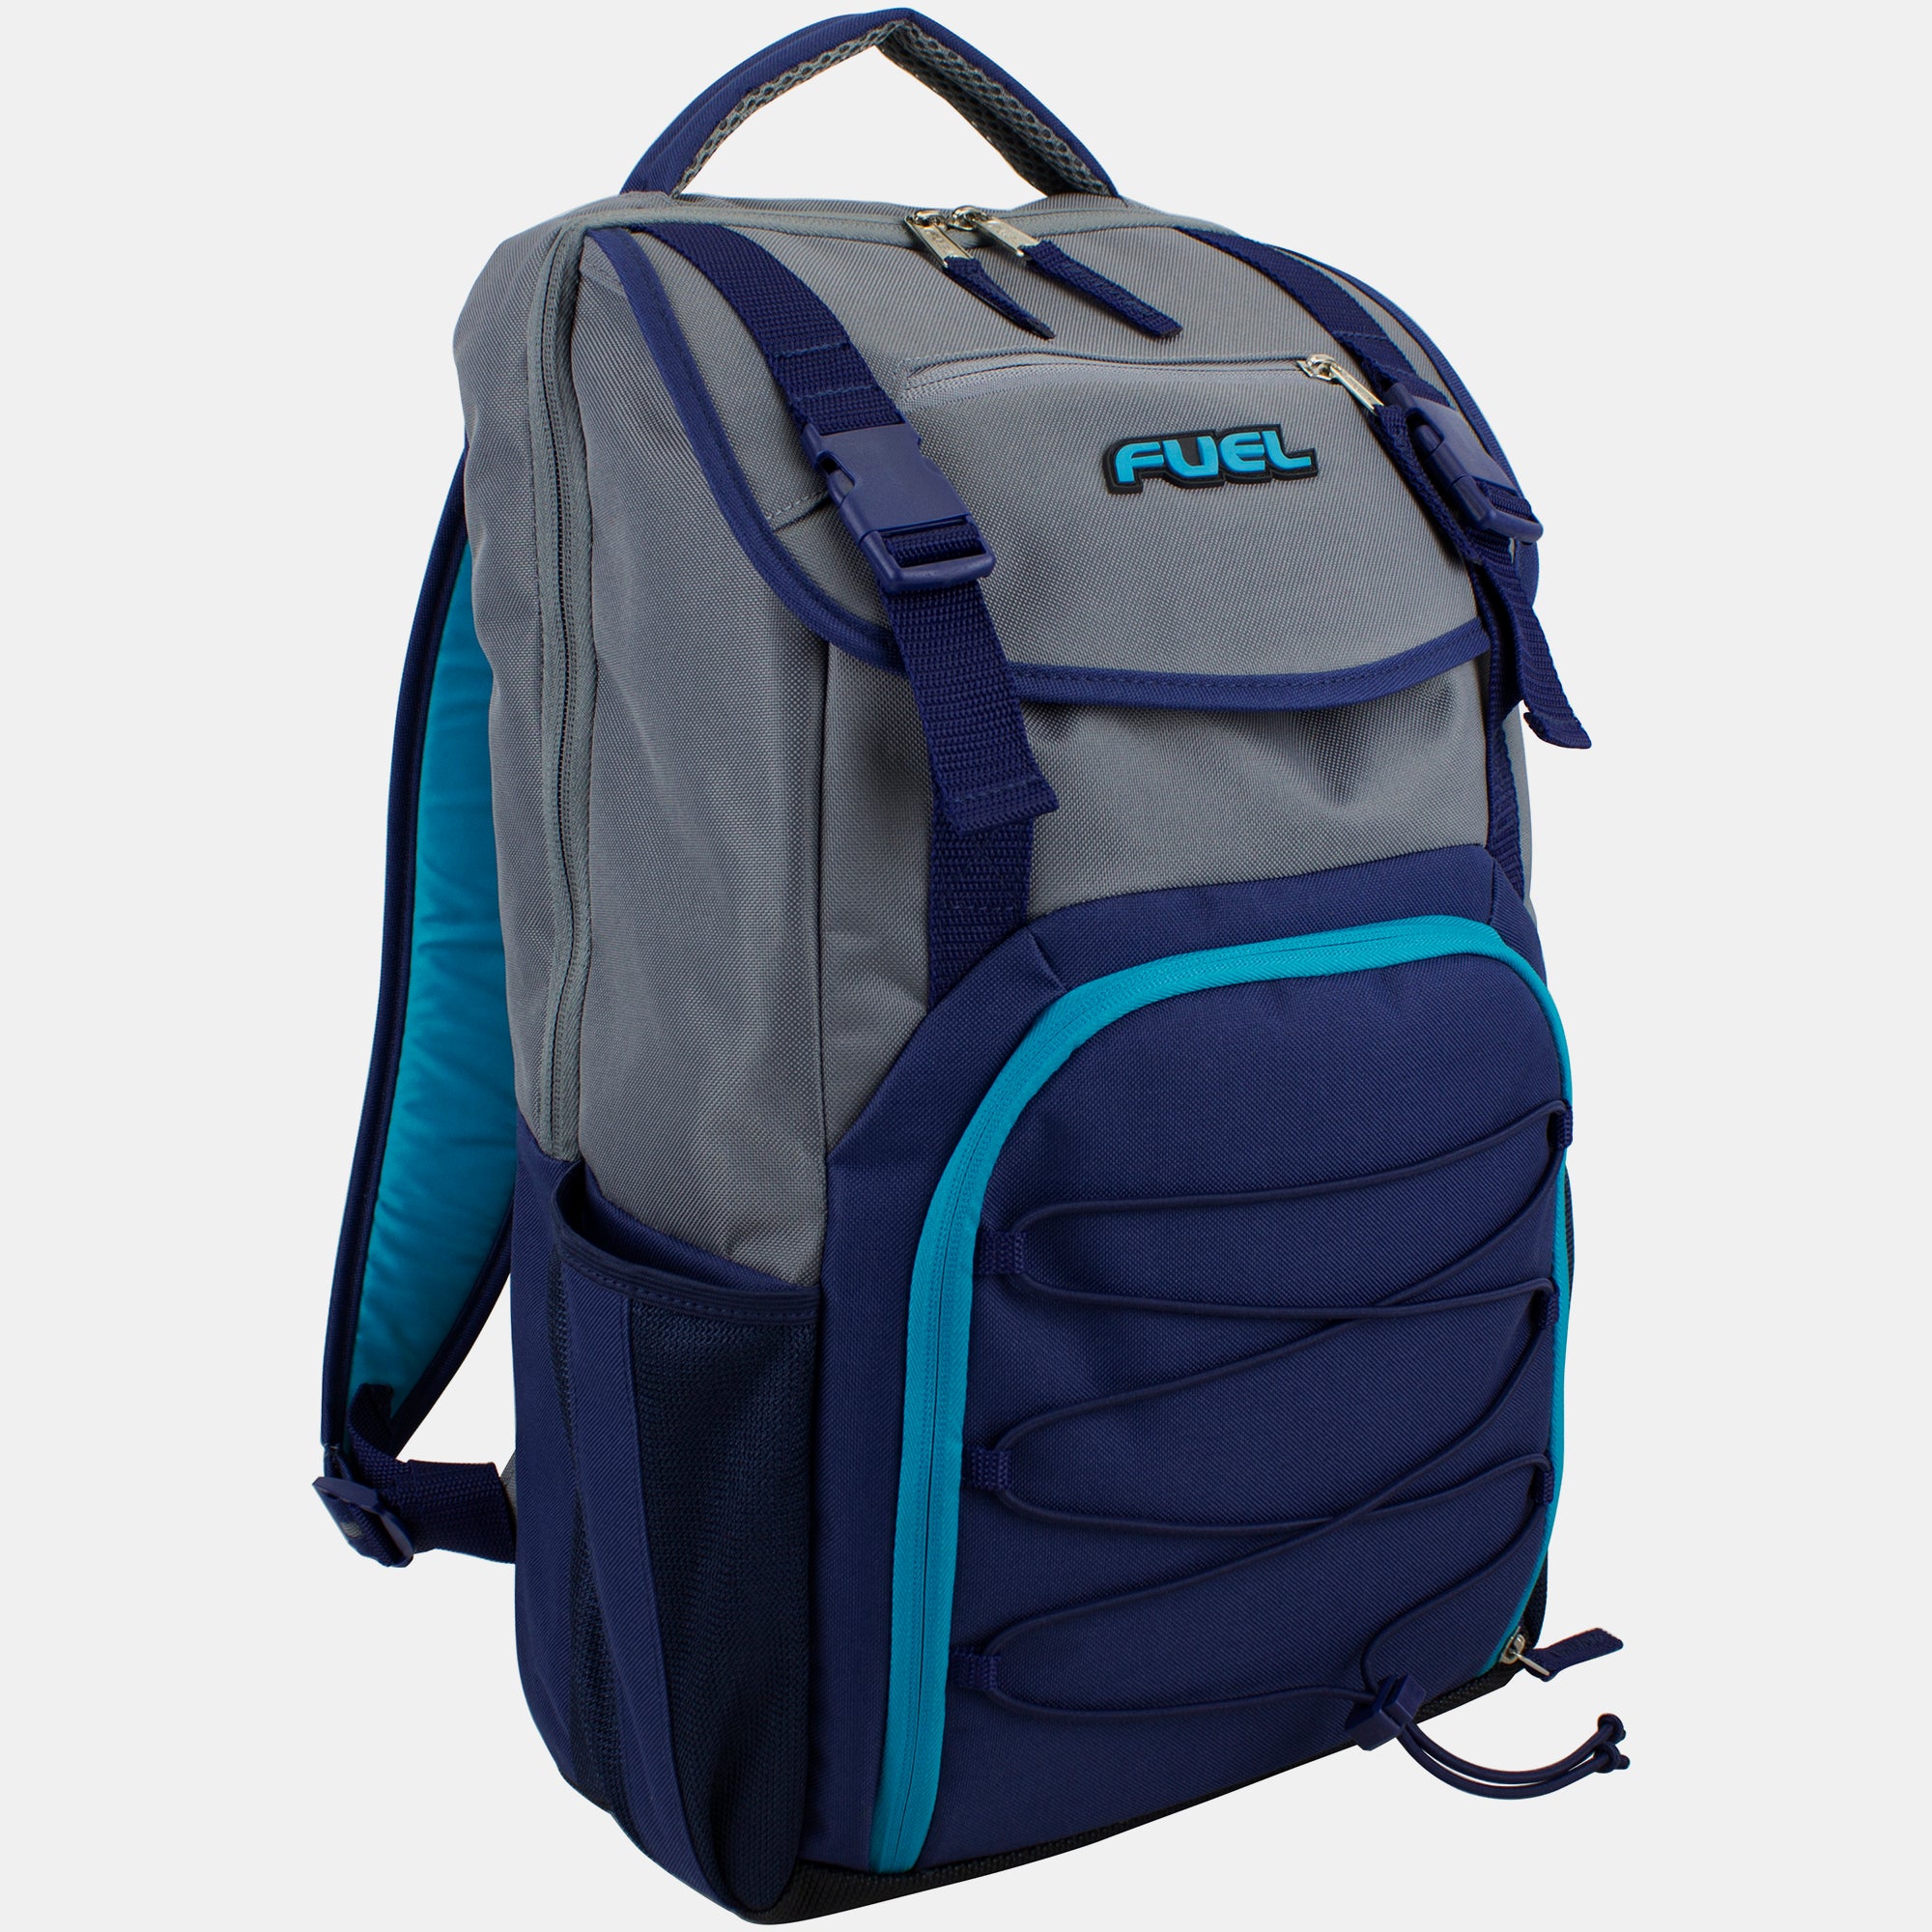 Fuel Triumph Backpack – Fuel USA